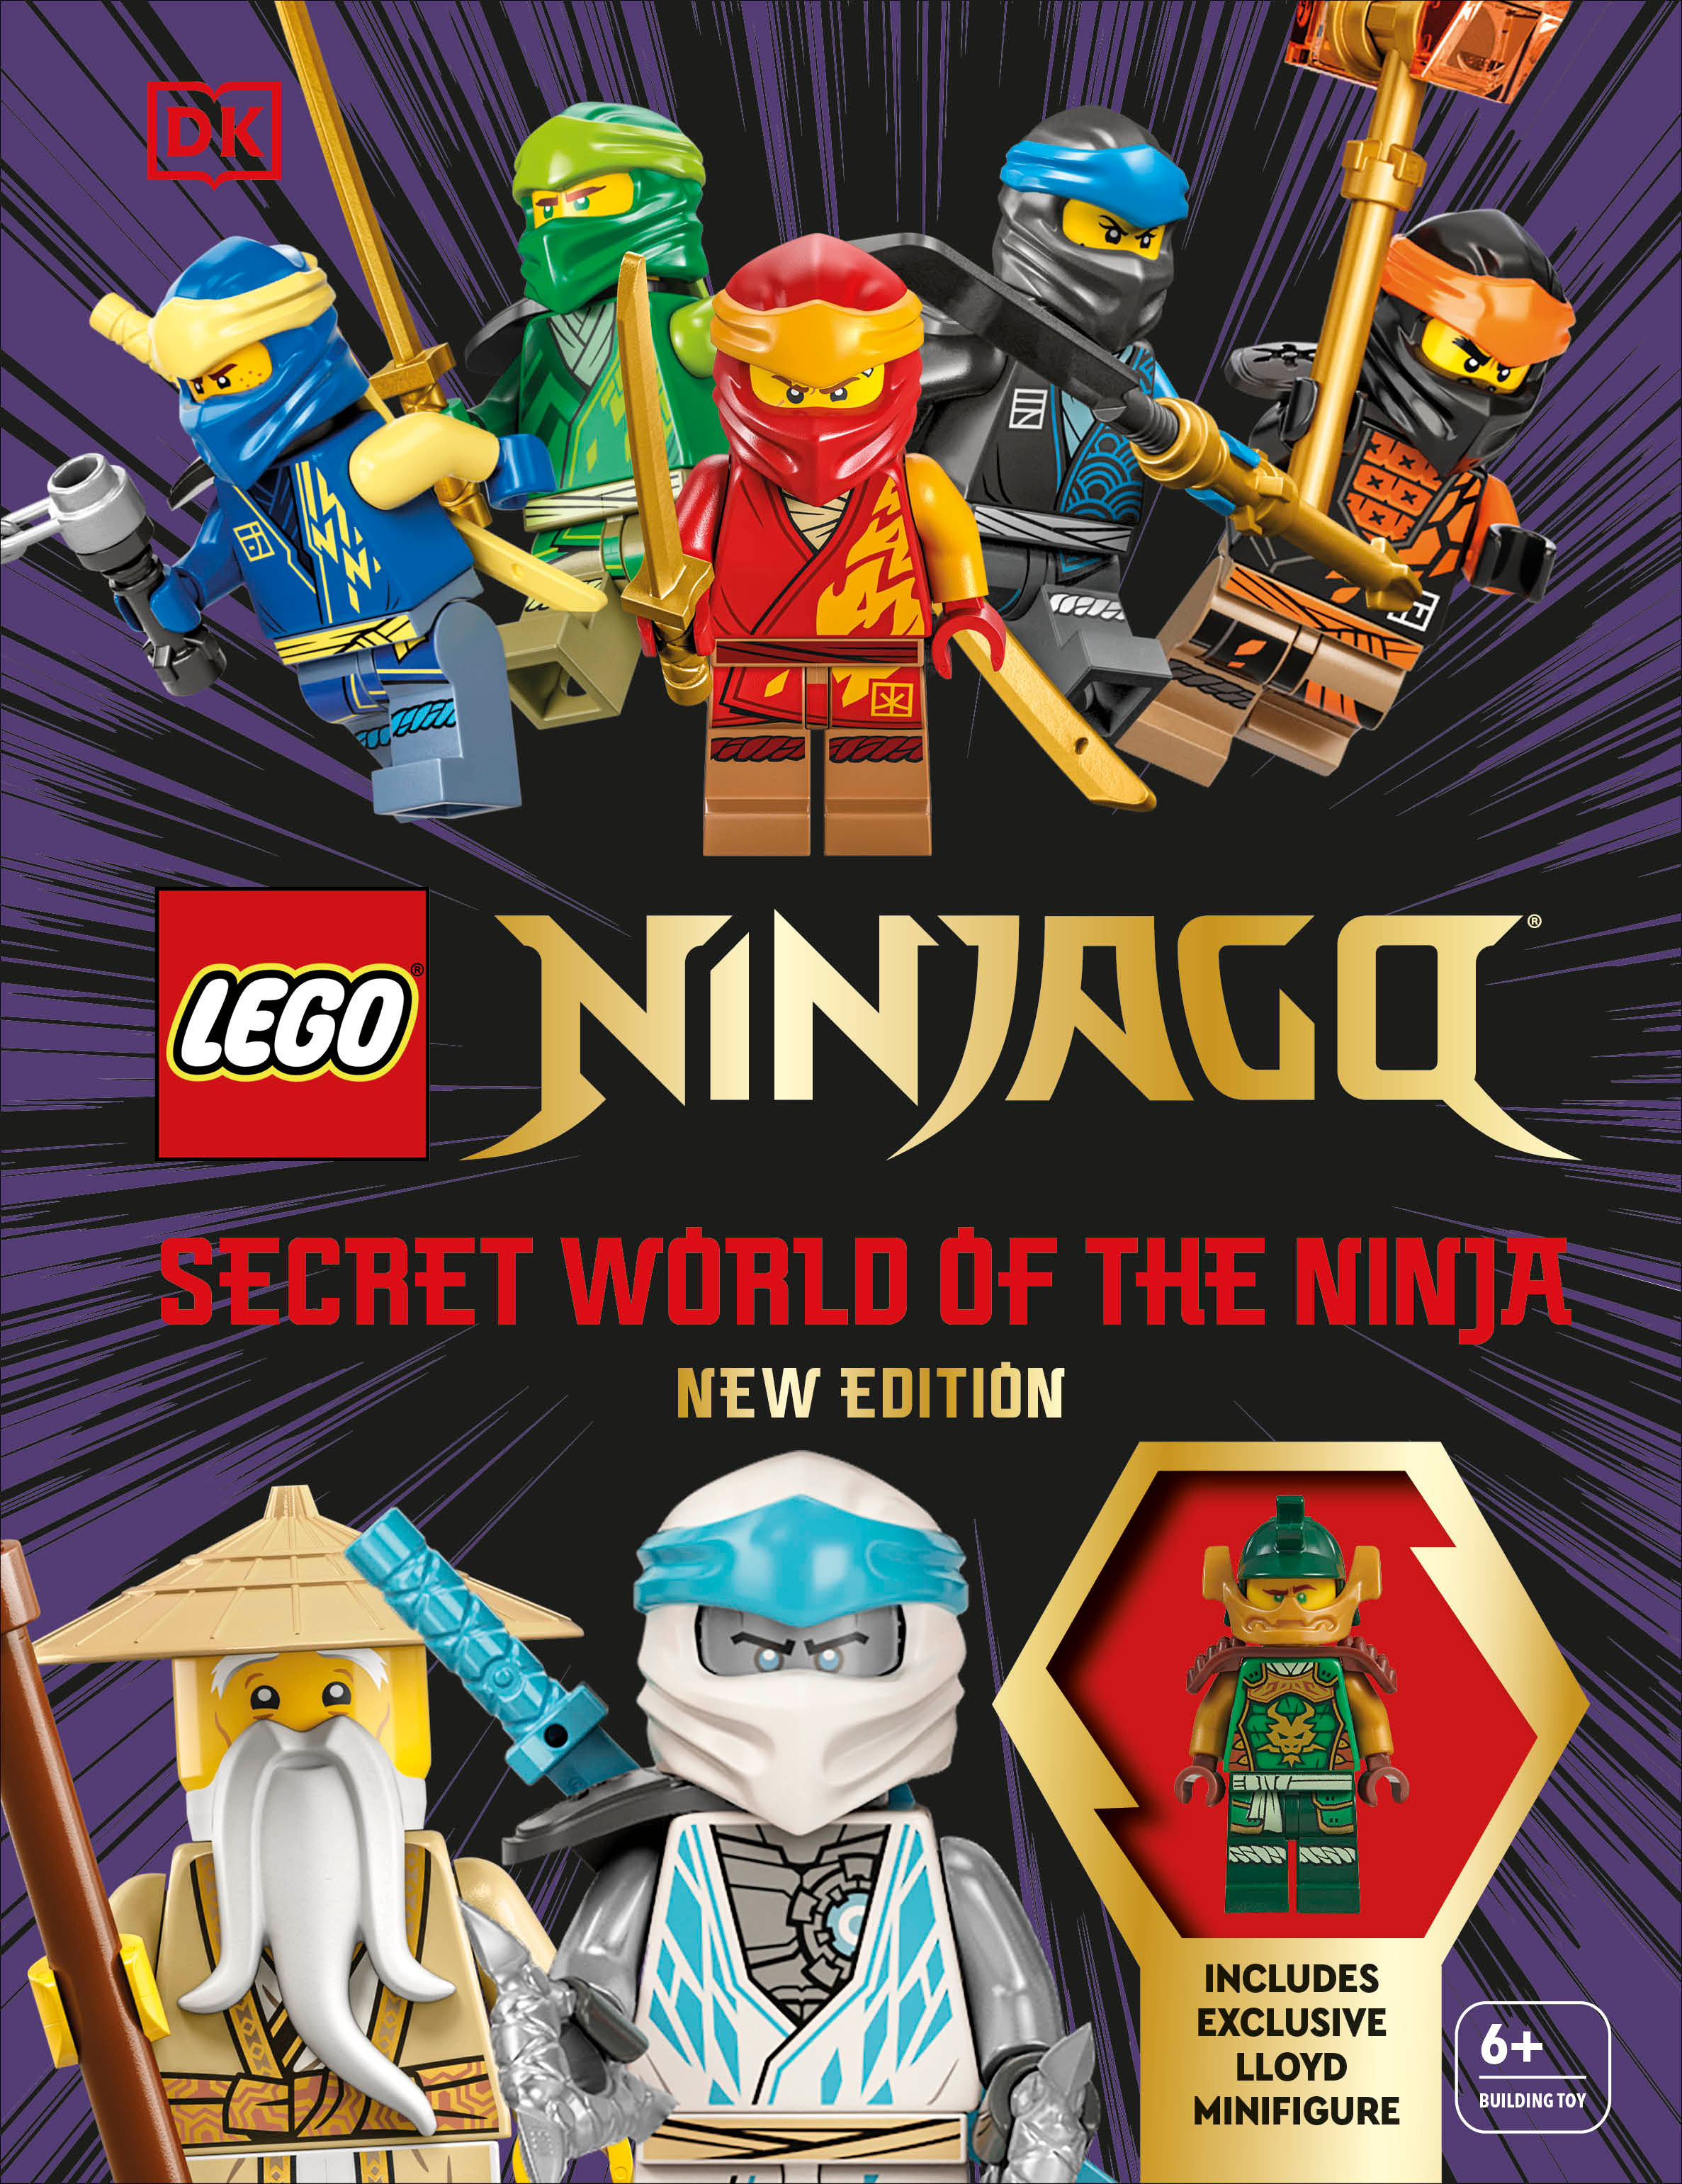 Lego Ninjago Secret World of the Ninja With Exclusive Lloyd Lego Minifigure New Edition